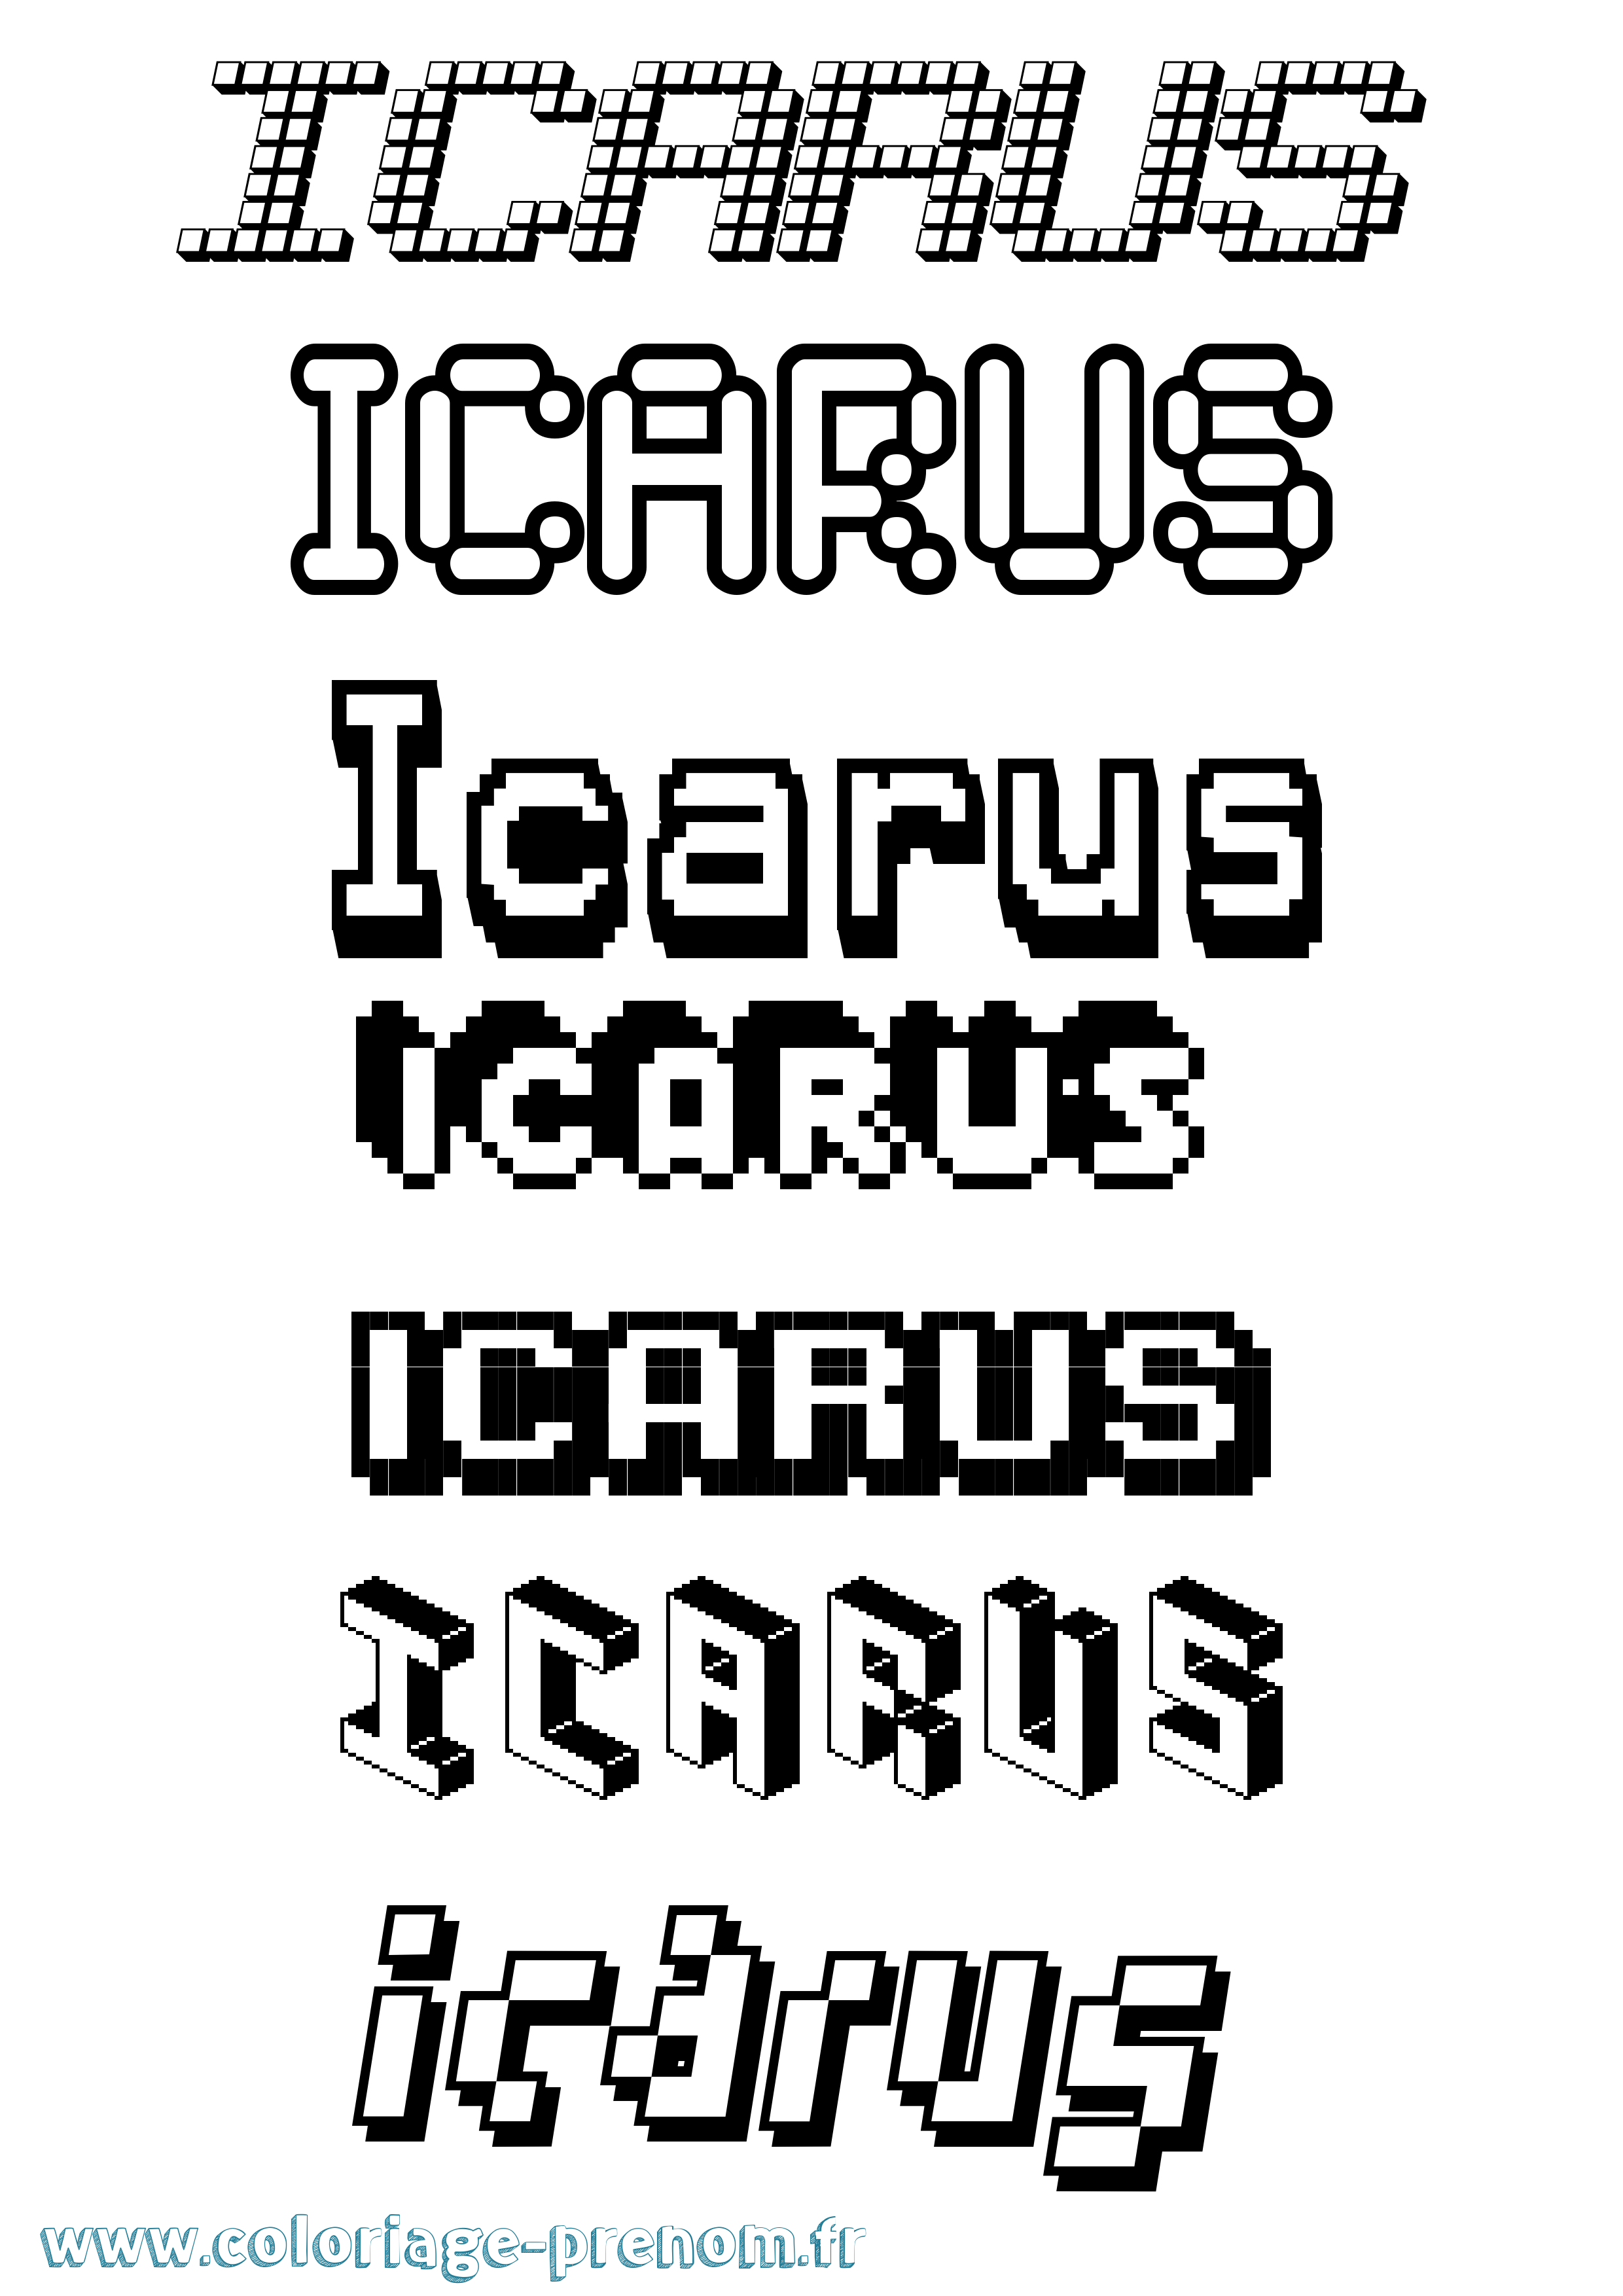 Coloriage prénom Icarus Pixel